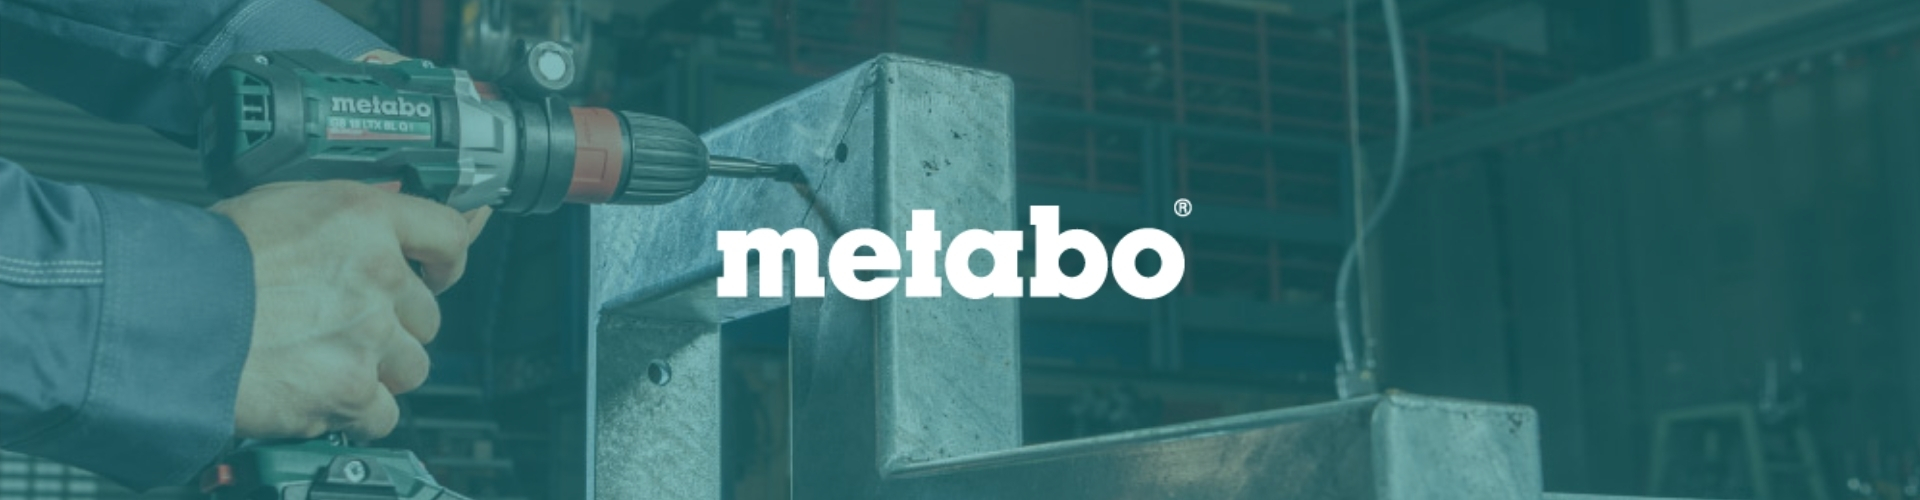 Metabo: Unternehmen & Produkte | DEXIS Austria